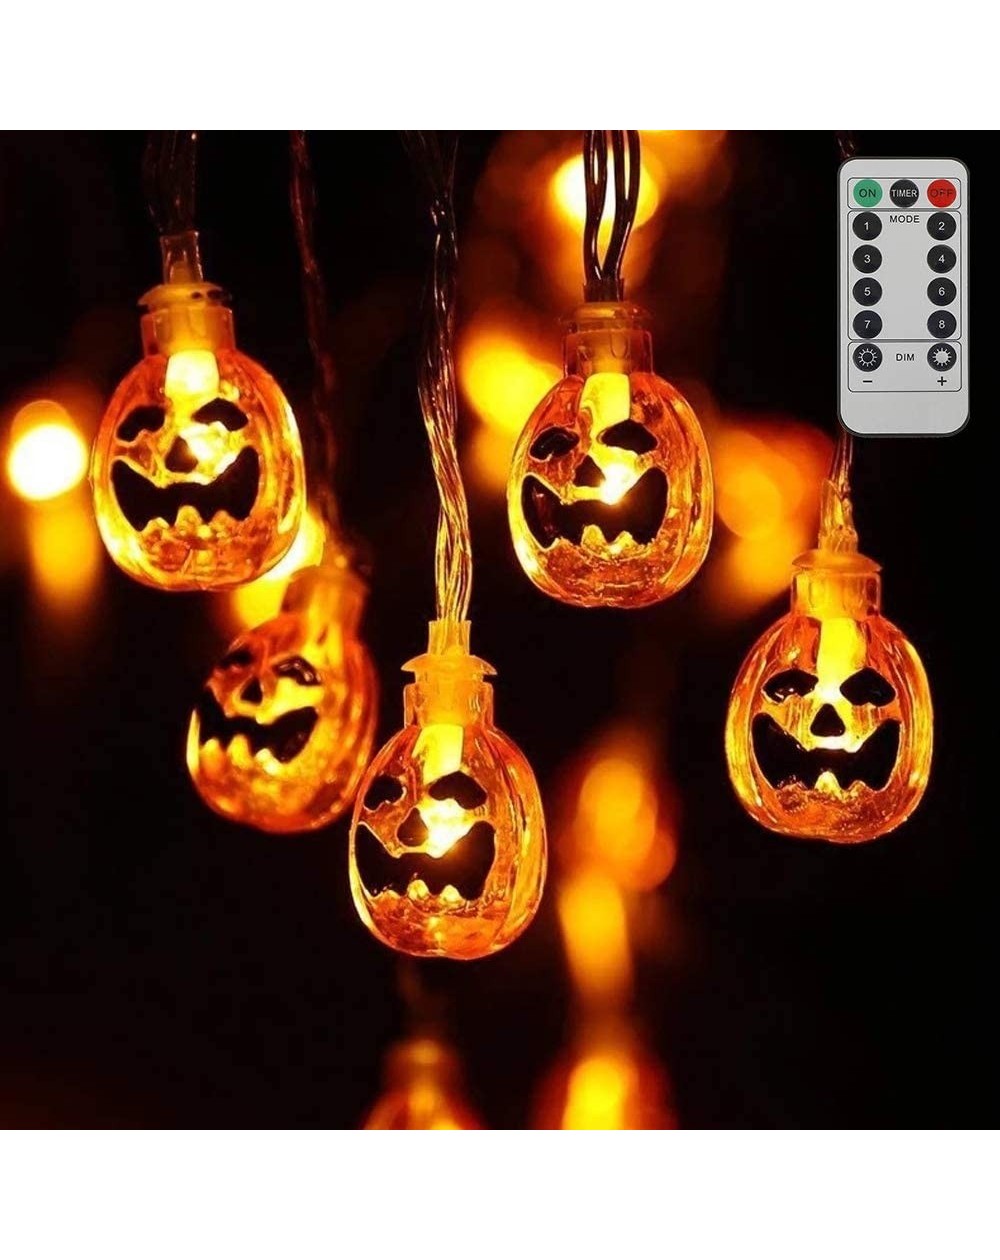 Outdoor String Lights Halloween Decorations Pumpkin String Lights 15ft 30 LEDs Jack-O-Lantern Pumpkin Lights with Remote Cont...